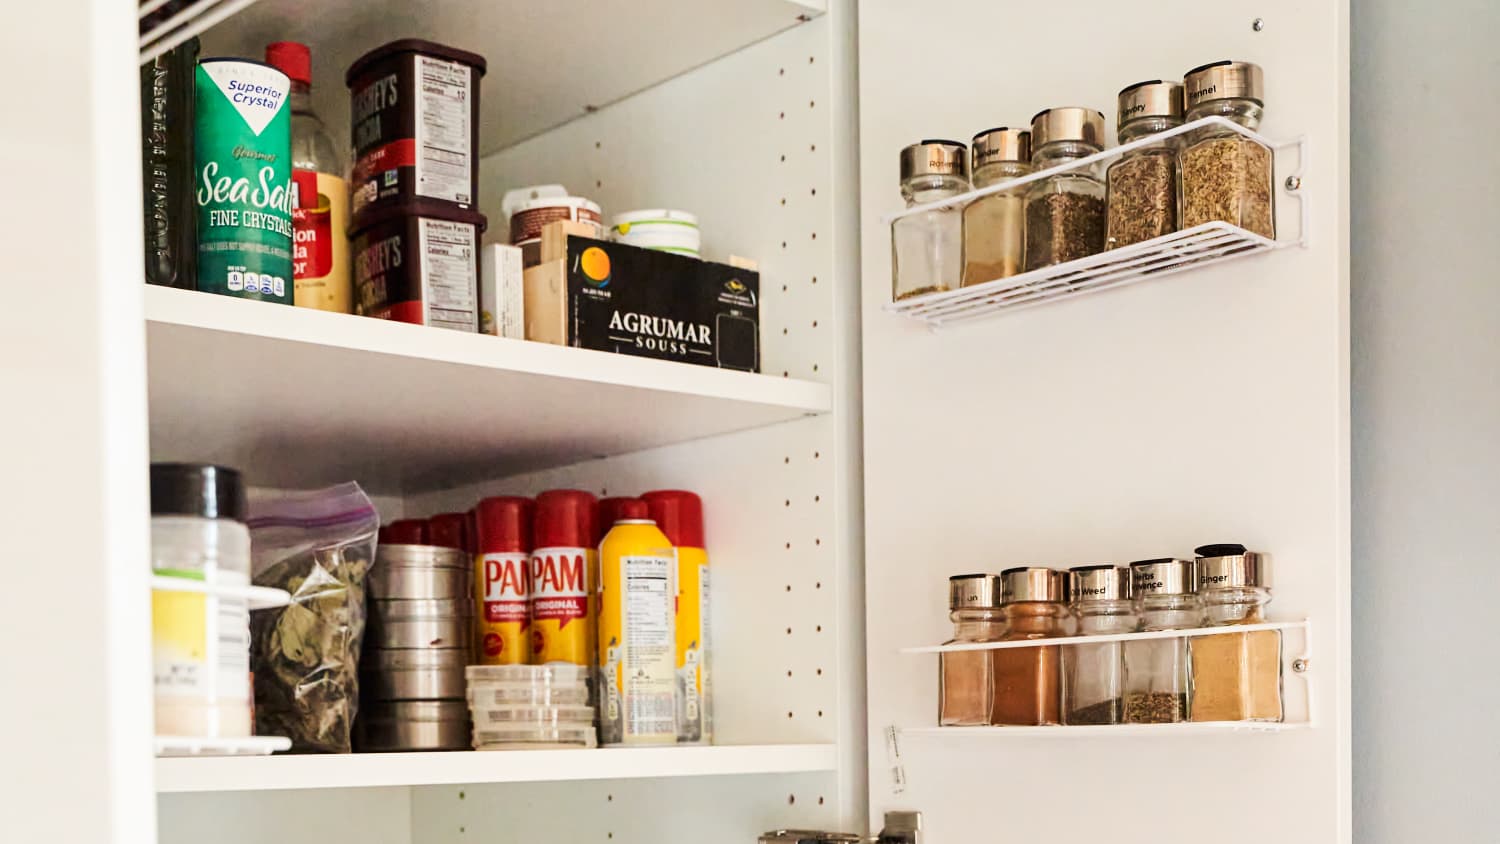 Pantry Organization for Food Storage - Food Storage Organizer